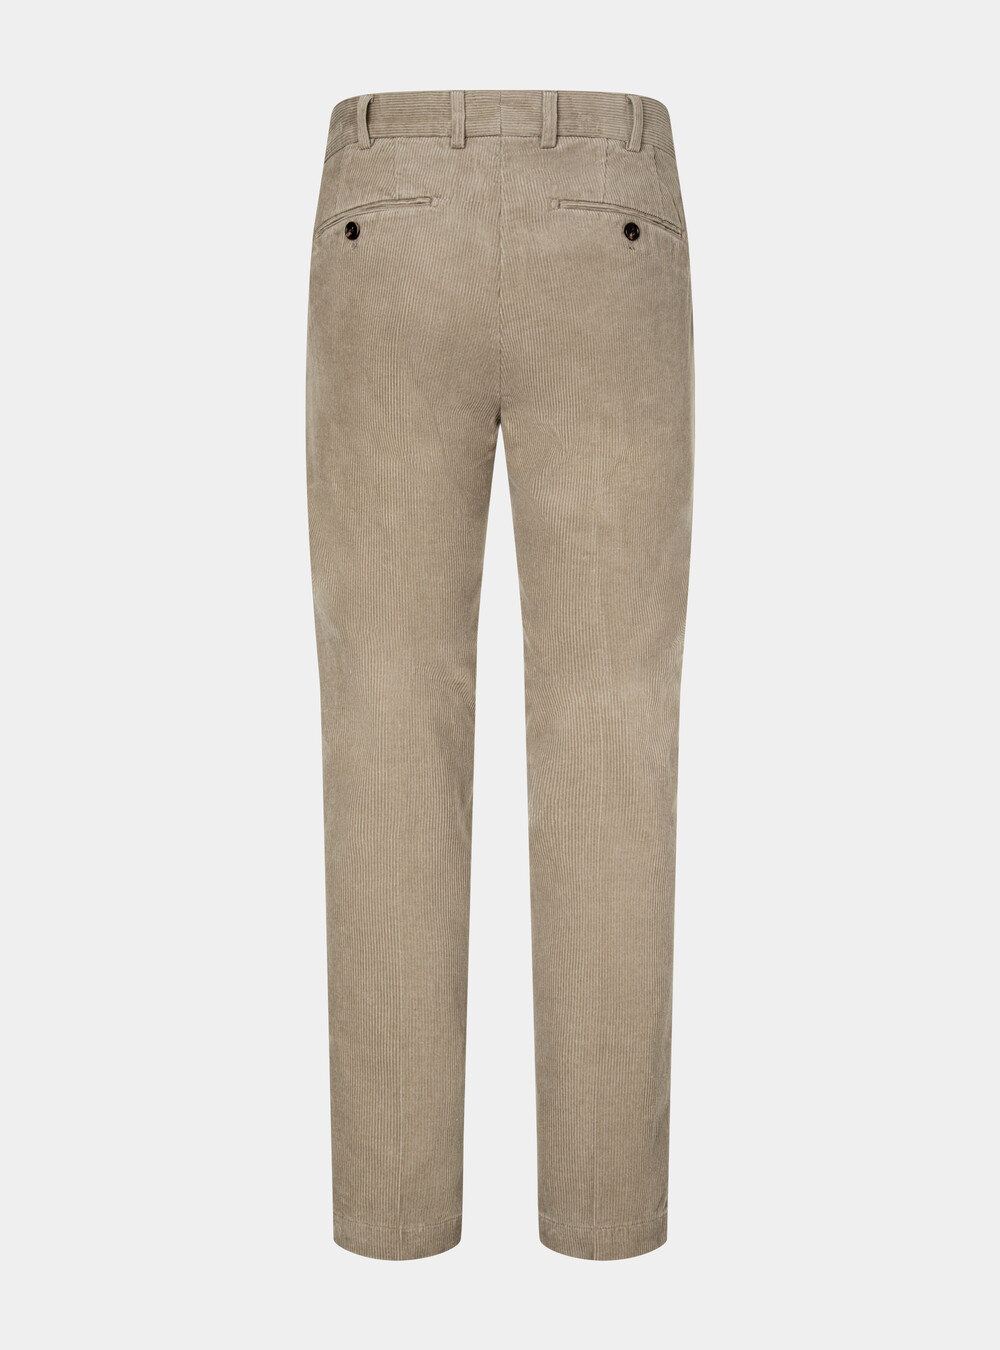 Corduroy trousers | GutteridgeEU | Men's catalog-gutteridge-storefront